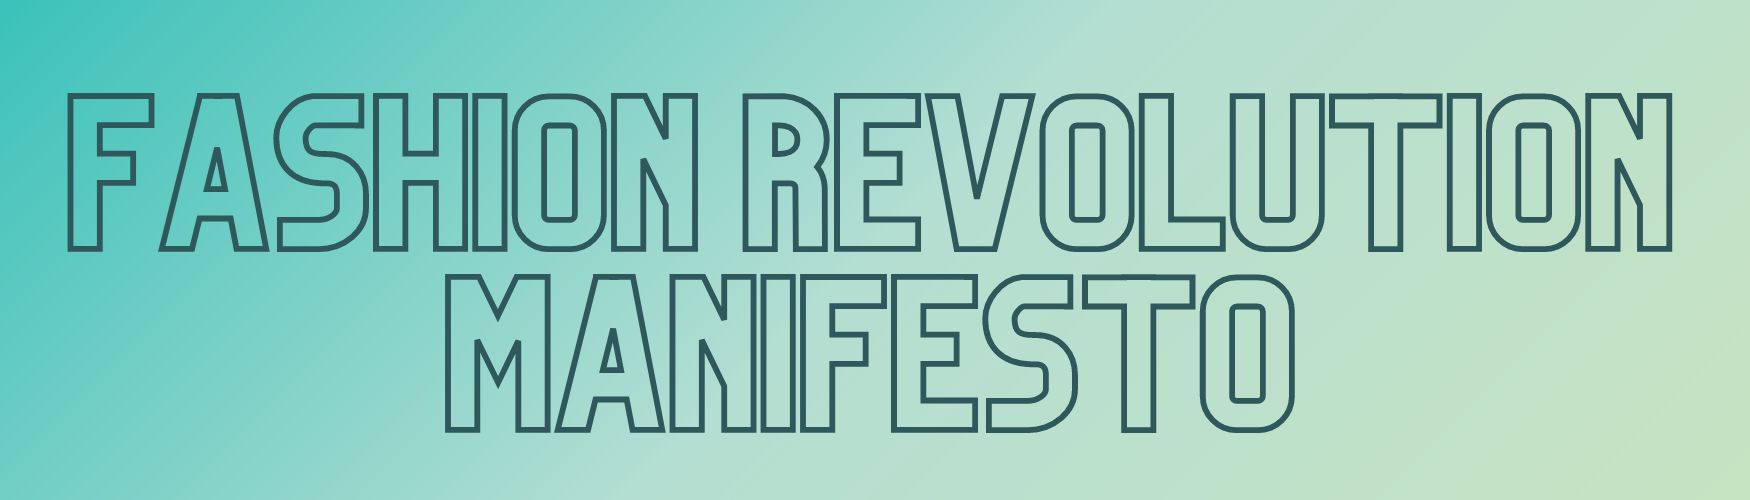 Fashion Revolution Manifesto header